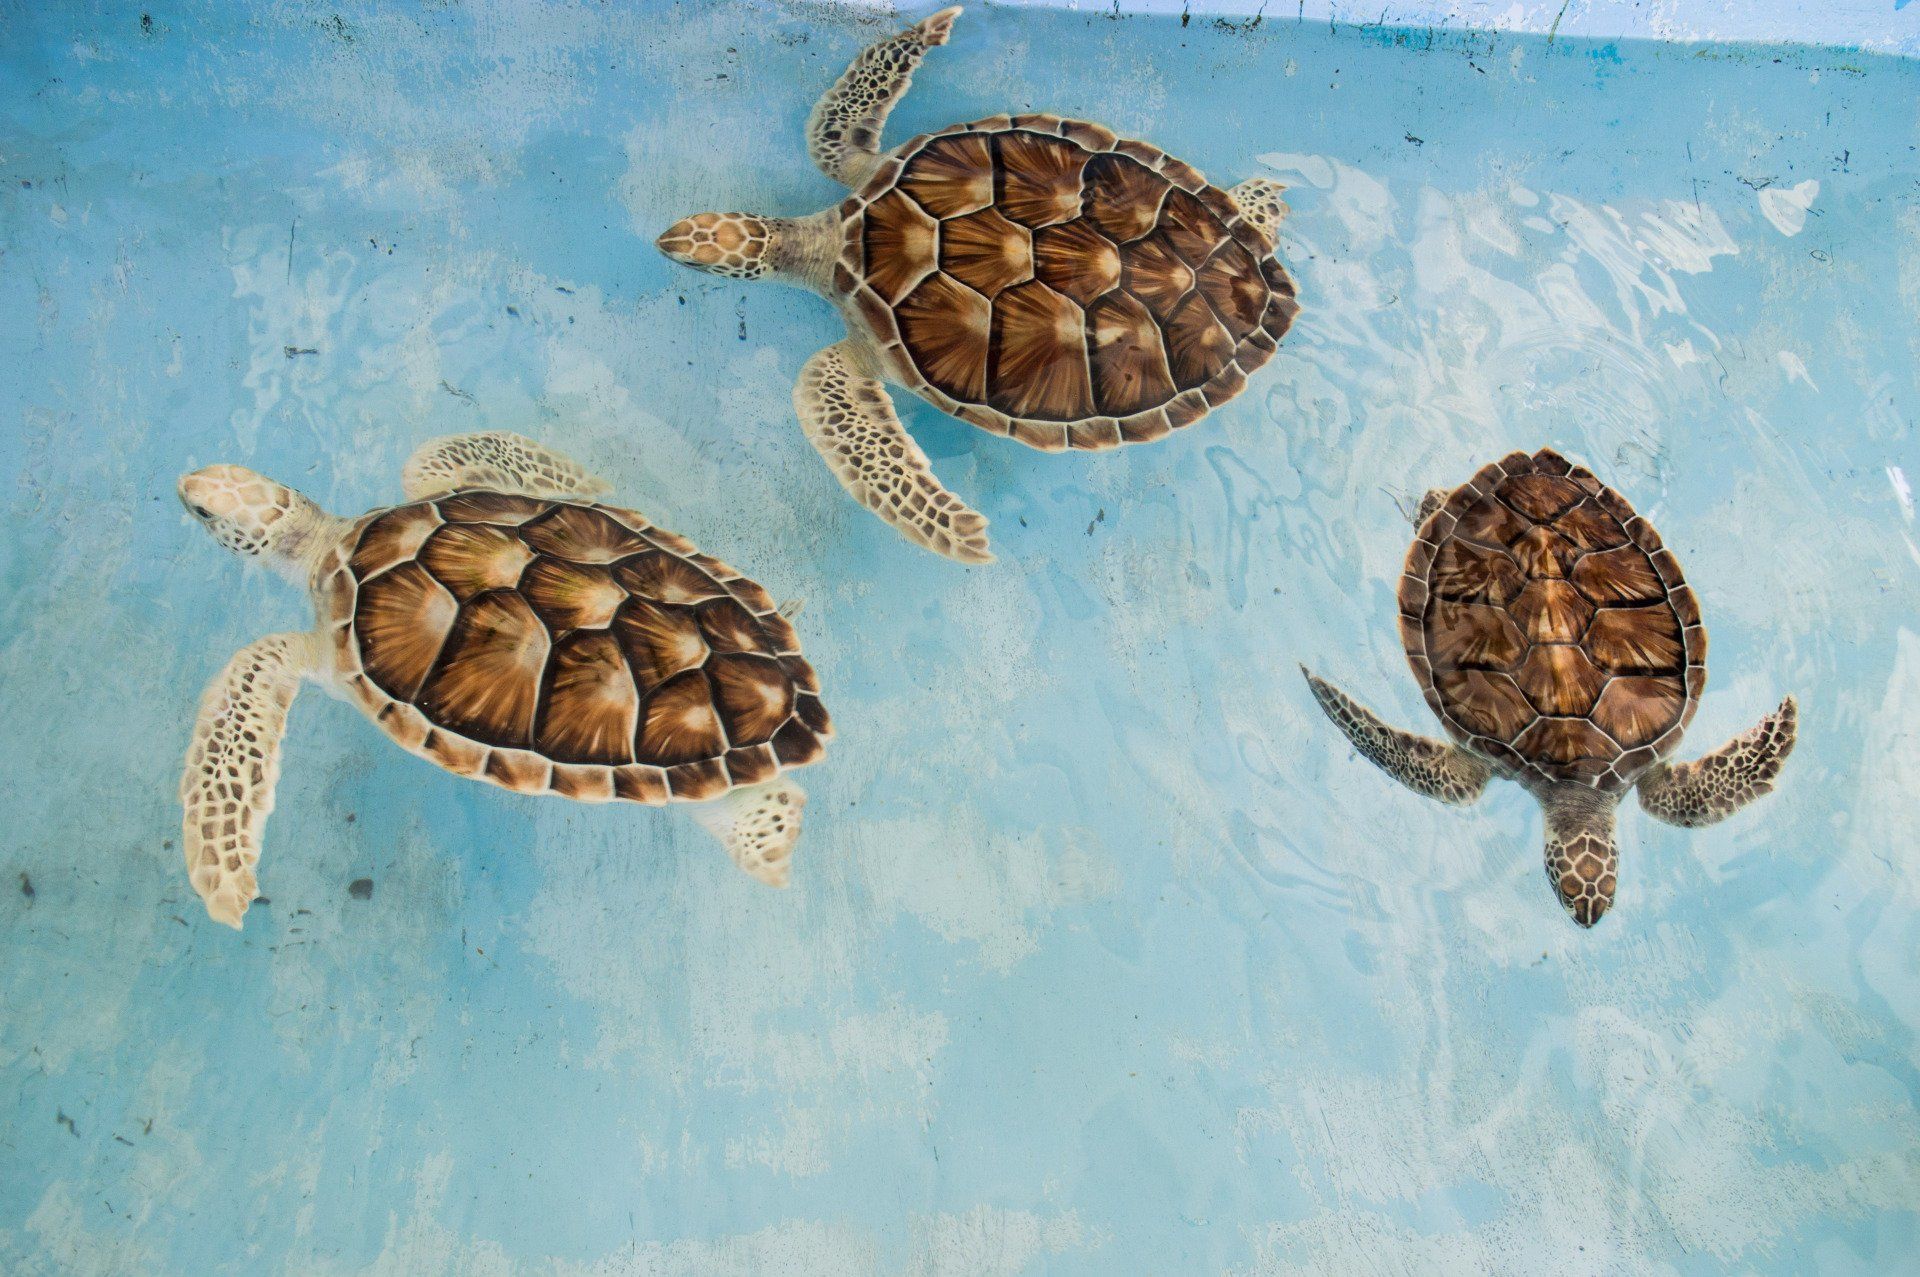 three turtles swimming in water